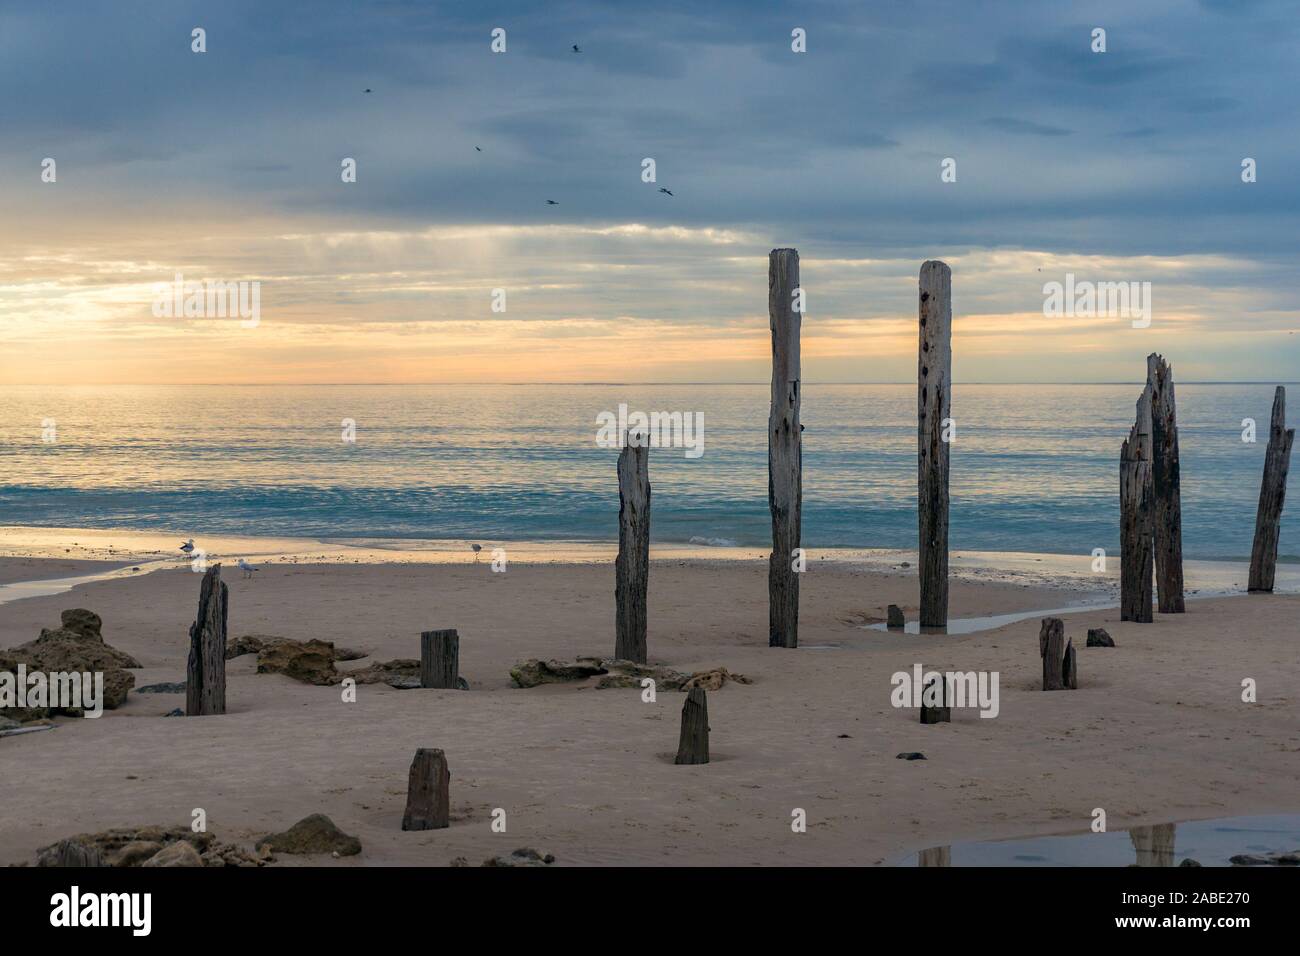 Old jetty pylons on a beach with sunset sky. Port Willunga, South Australia Stock Photo